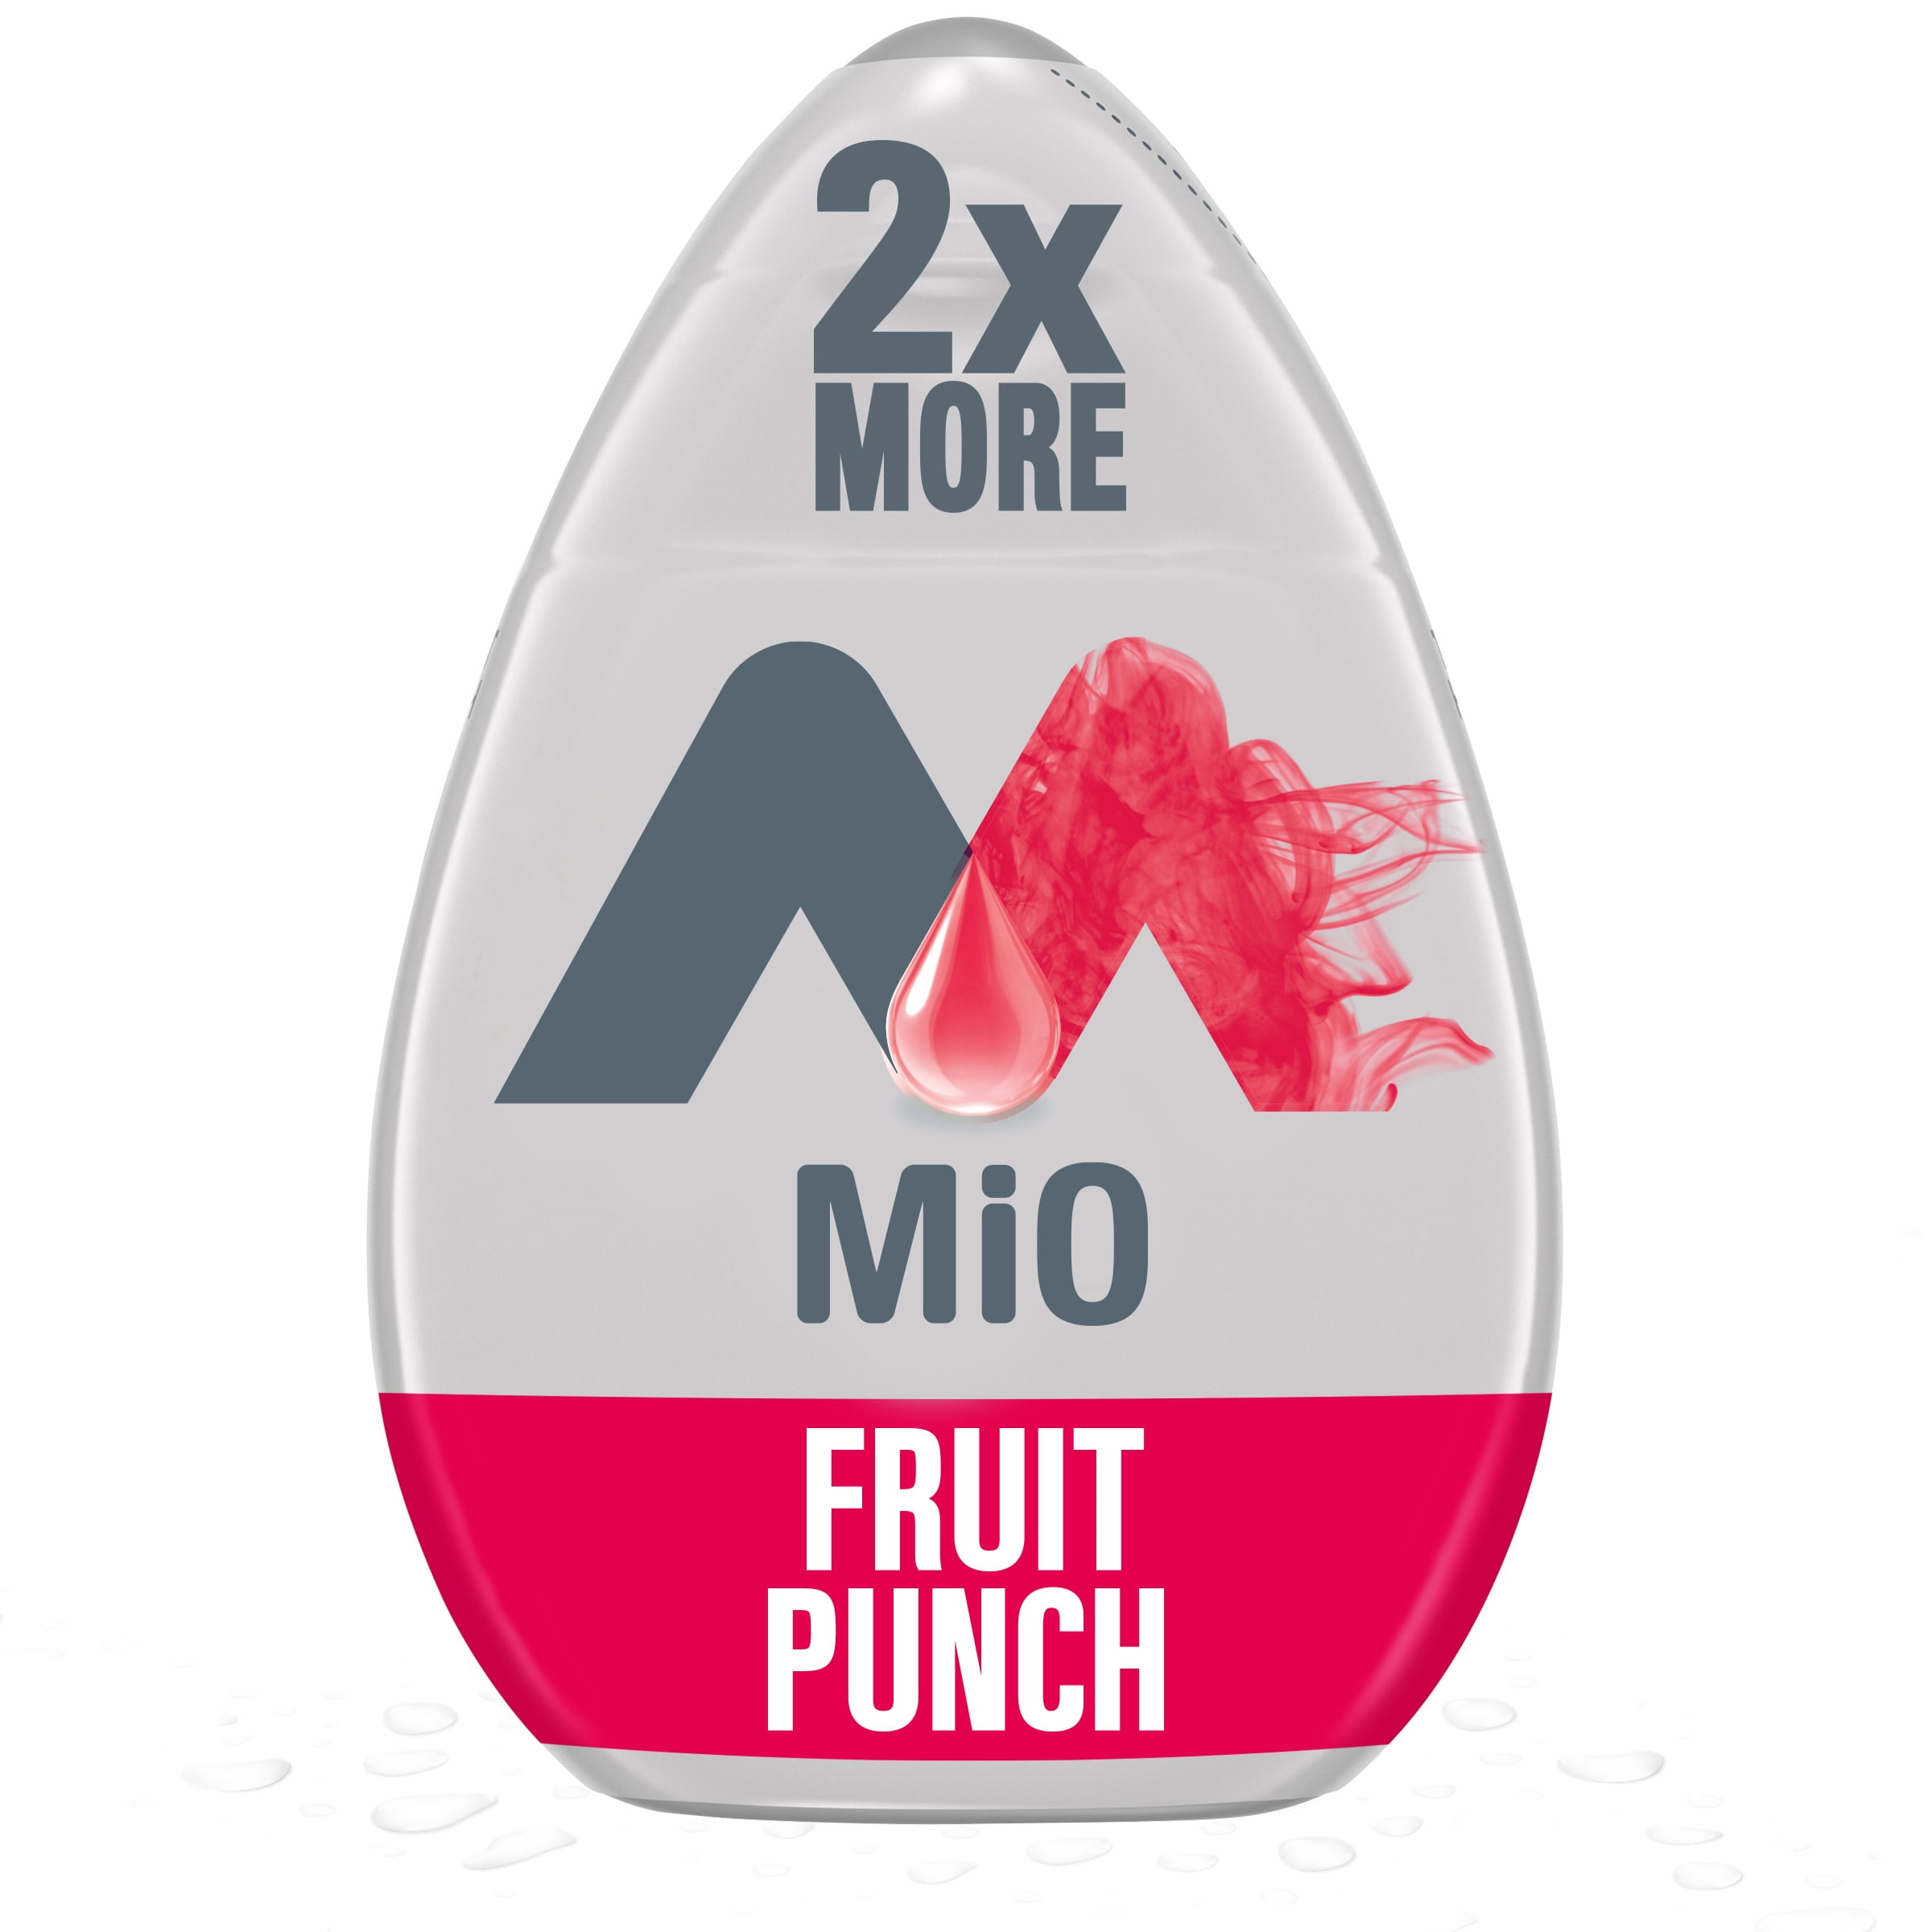 MiO Fruit Punch Sugar Free Water Enhancer with 2X More, 3.24 fl oz Big Bottle